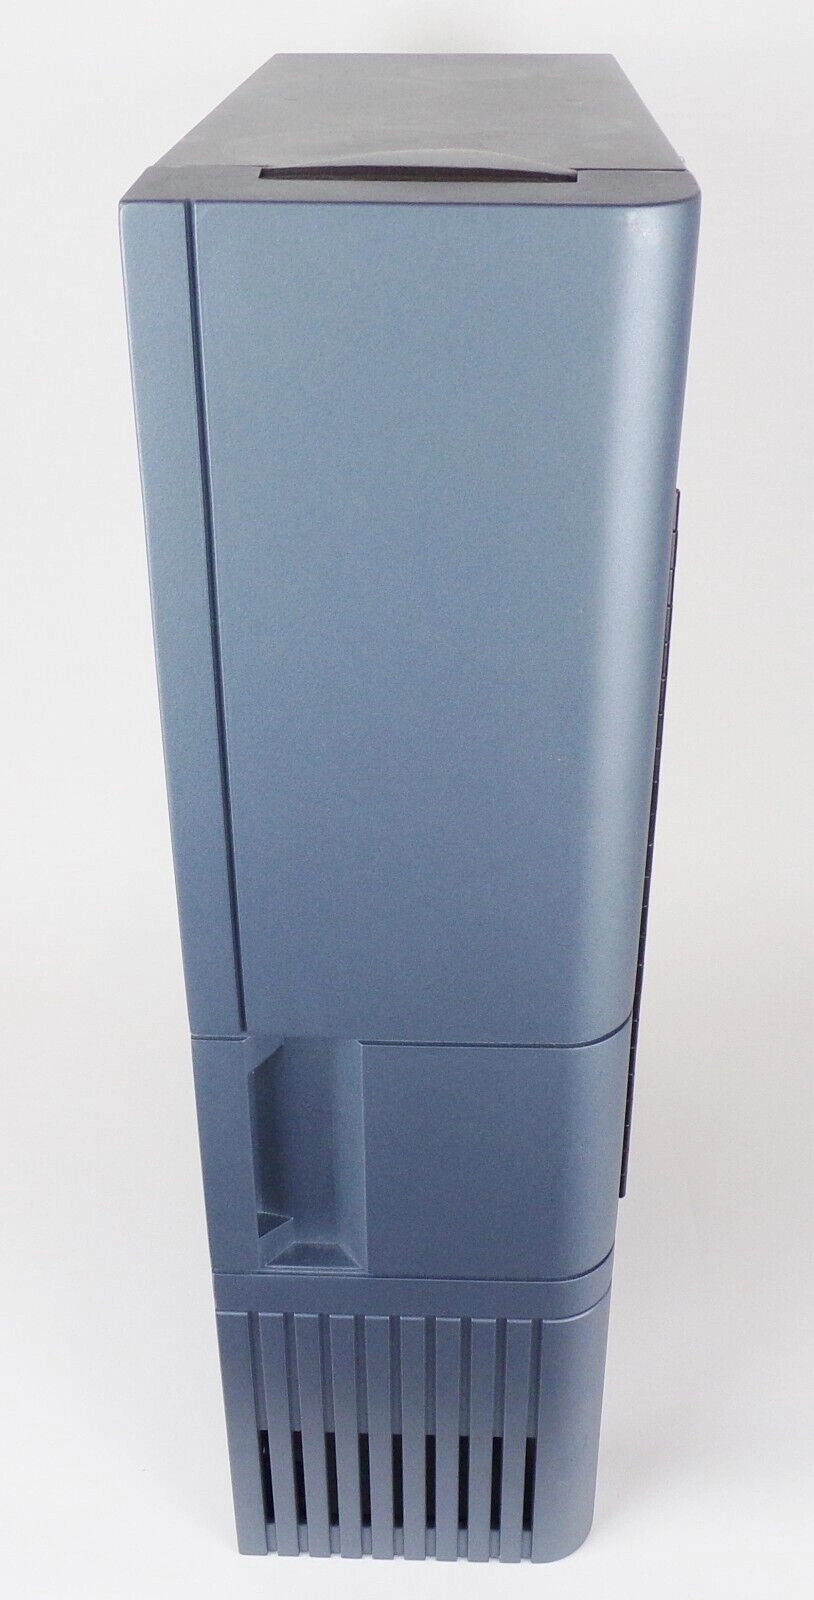 Waters Acquity UPLC 30 cm Column Heater 186015011